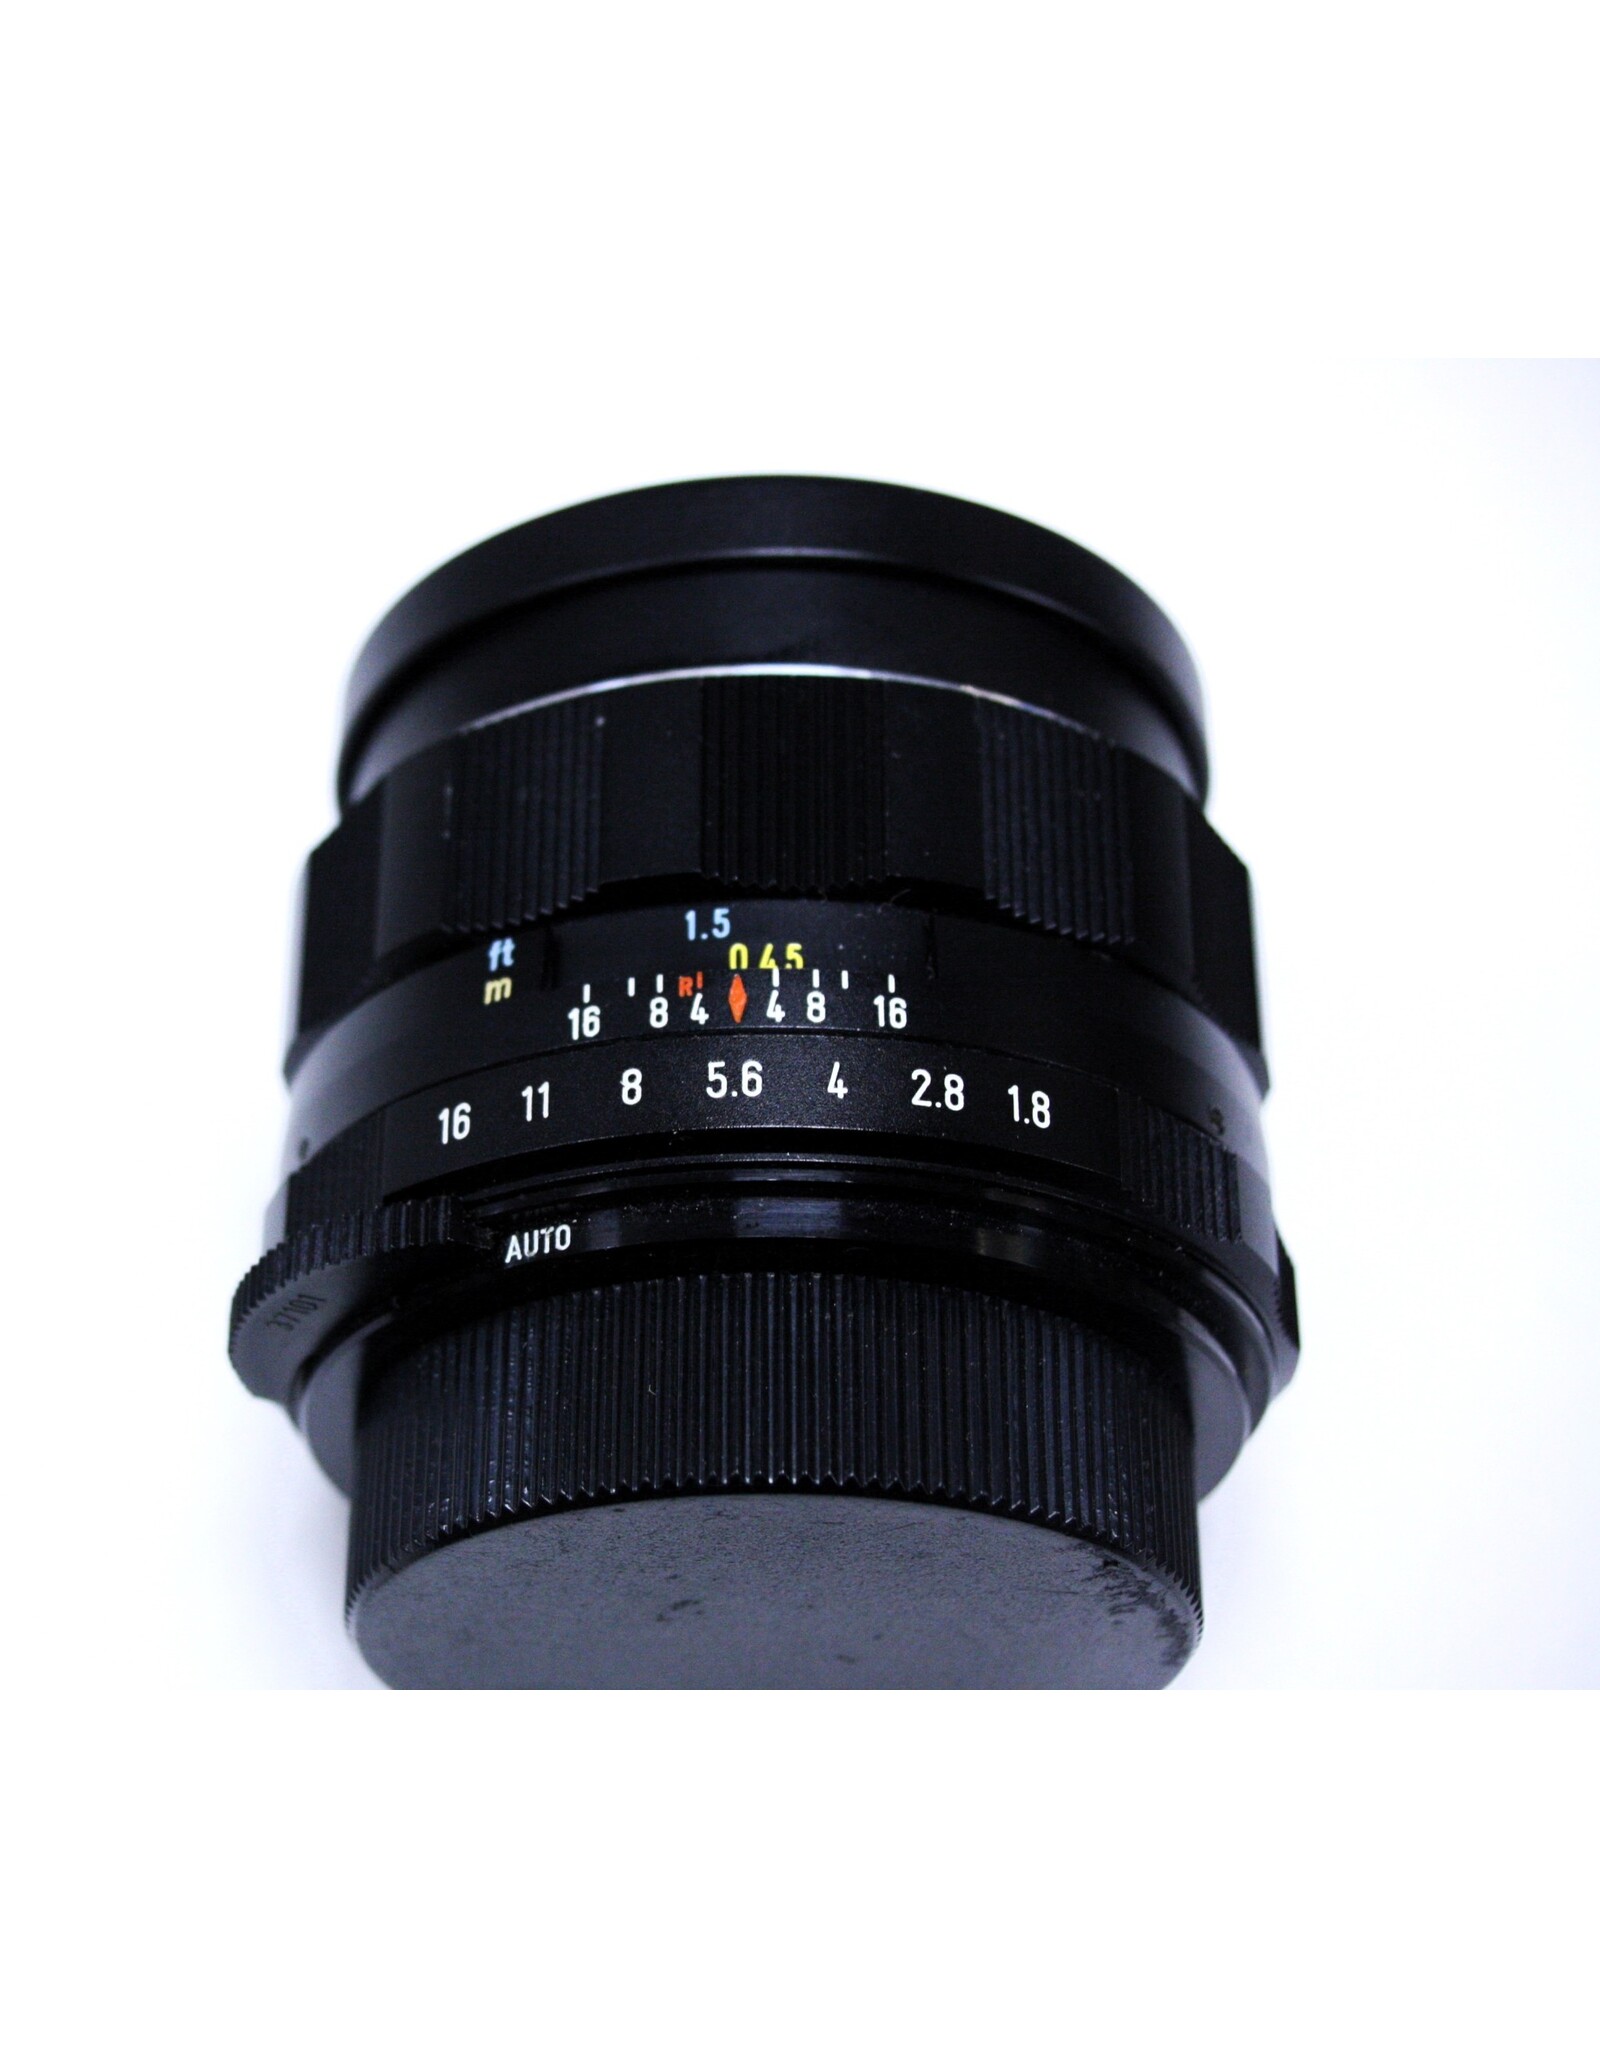 Pentax Super Takumar 55mm 1.8 Lens (Pre-owned)